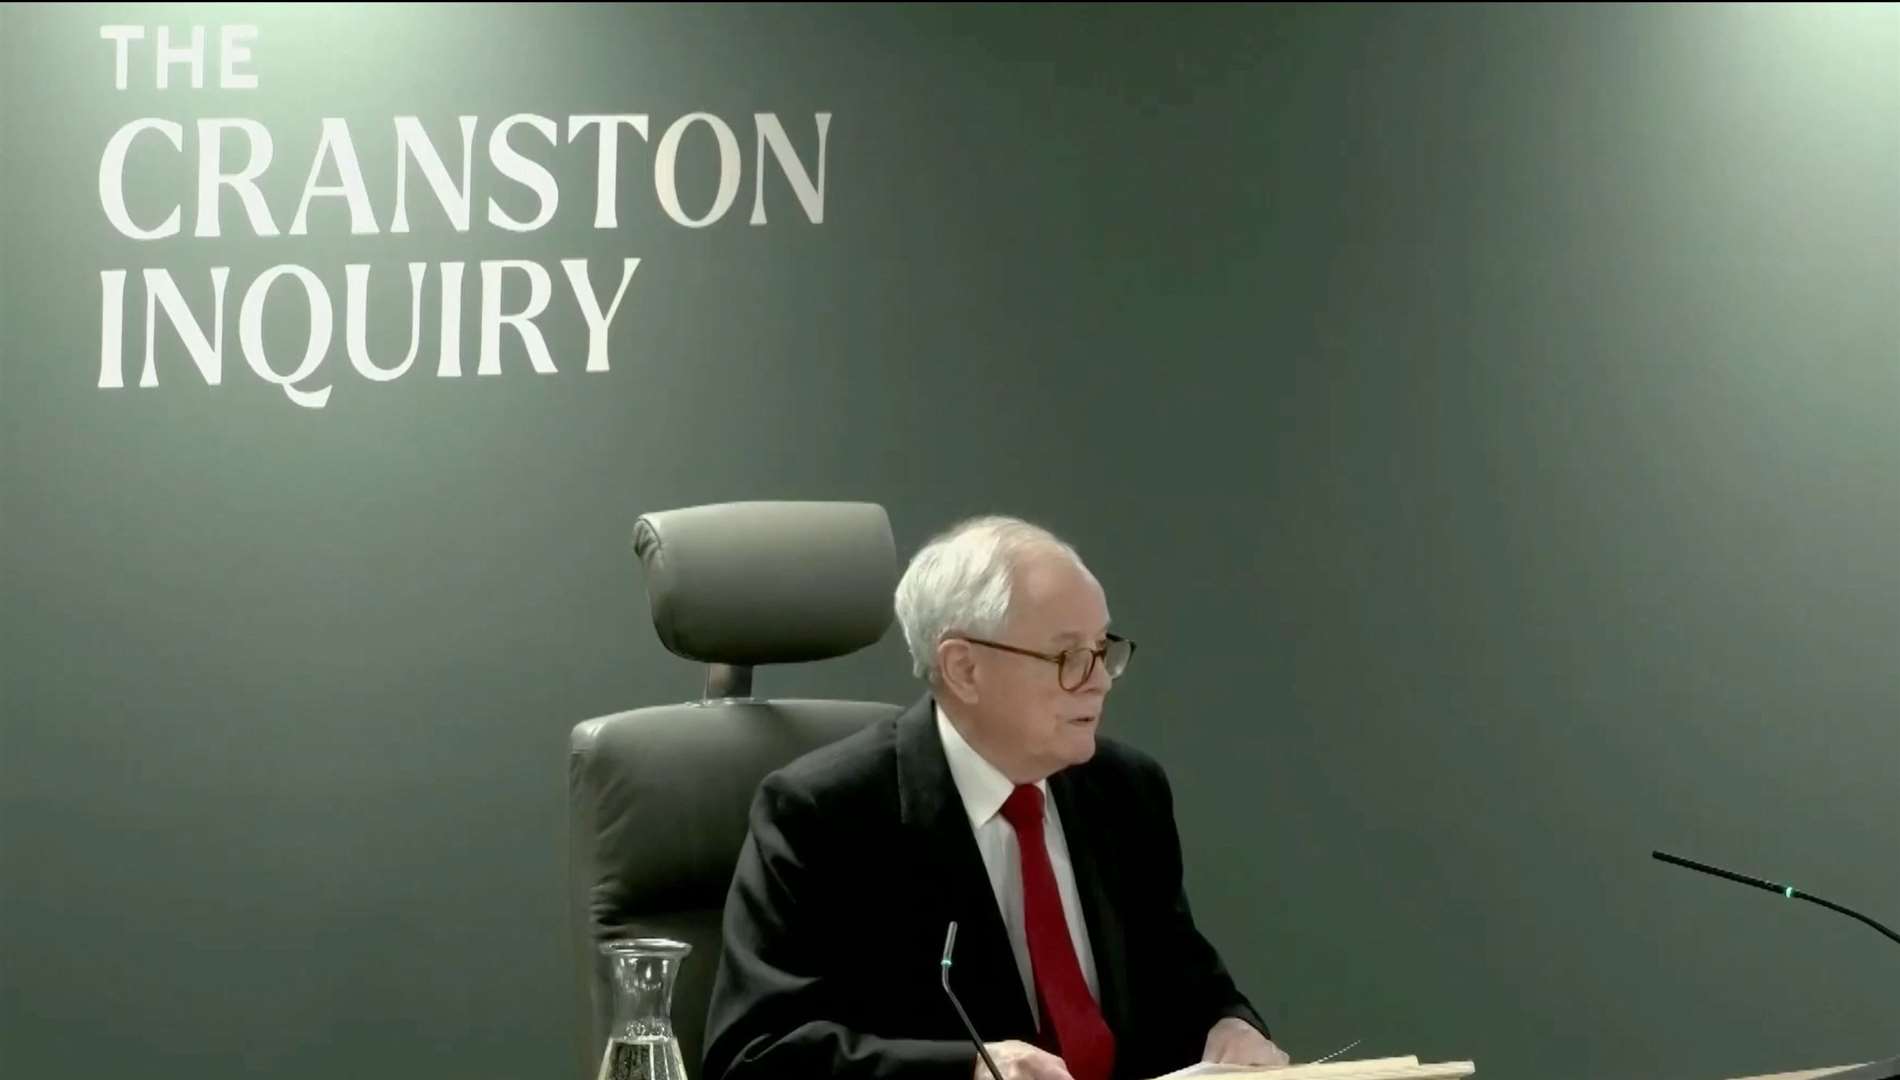 Chairman of the inquiry, Sir Ross Cranston (Cranston Inquiry)